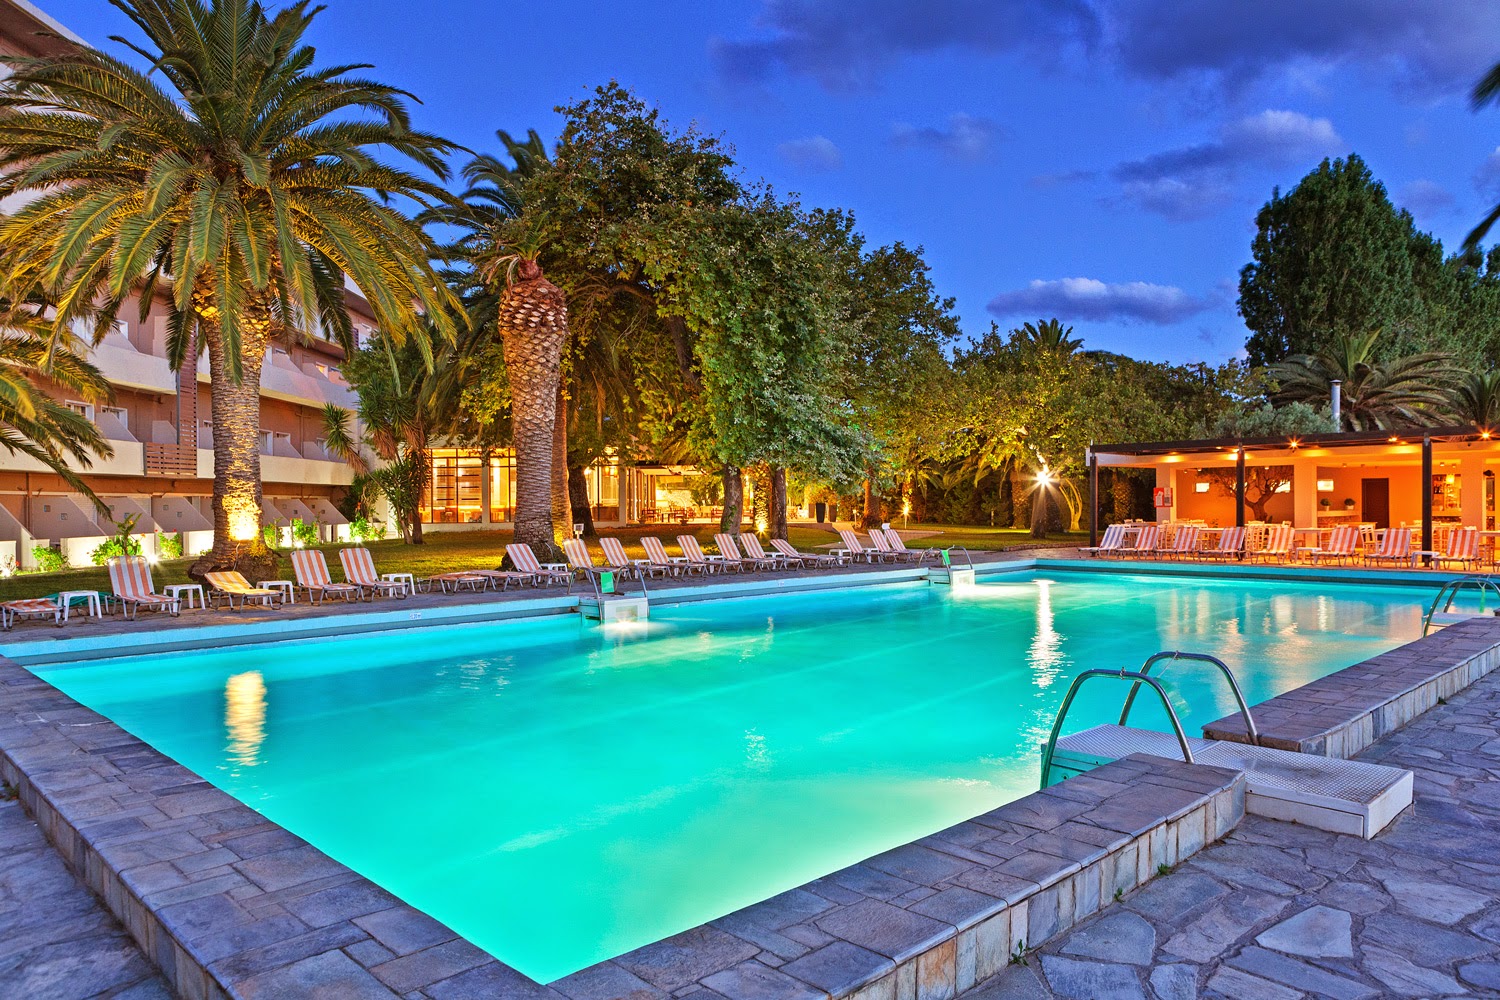 4* Long Beach Resort Hotel - Αίγιο ✦ -40% ✦ 3 Ημέρες (2 Διανυκτερεύσεις) ✦ 2 άτομα + 1 παιδί έως 12 ετών ✦ 12 ✦ Πάσχα (14/04/2023 έως 17/04/2023) ✦ Μπροστά στην Παραλία!